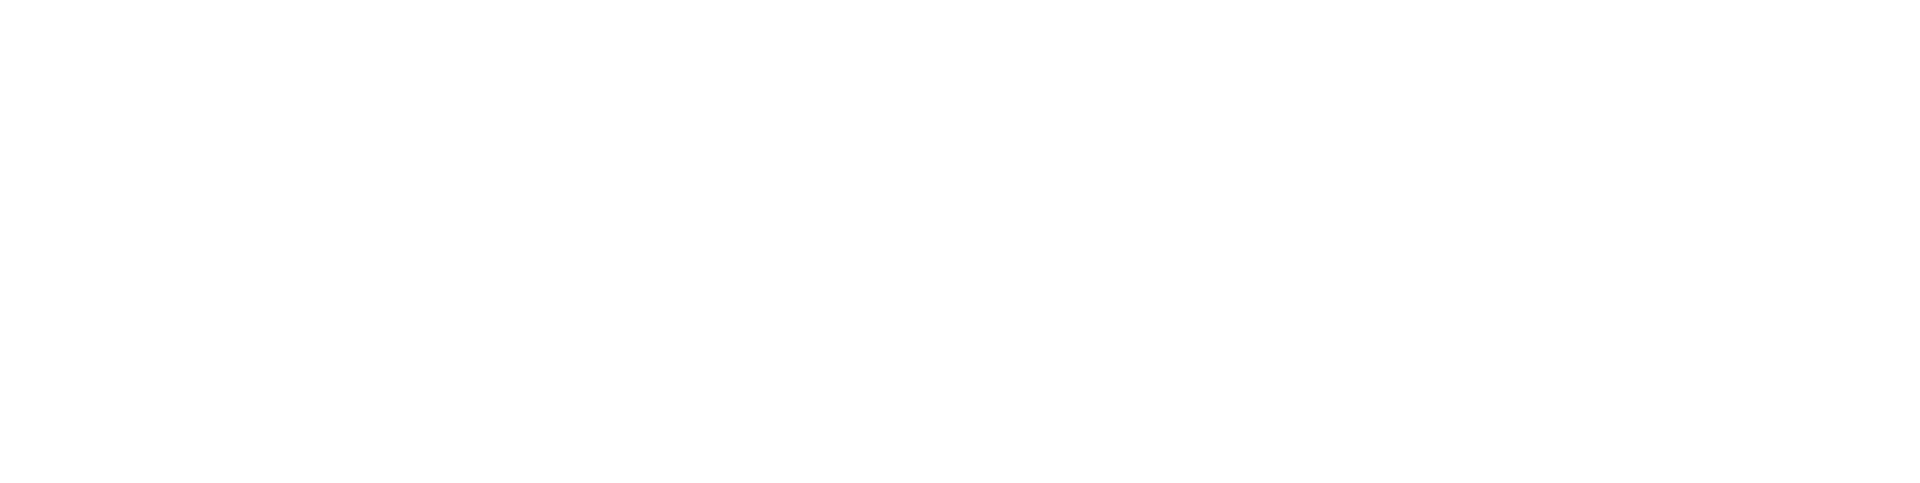 Timpano Hyde Park logo